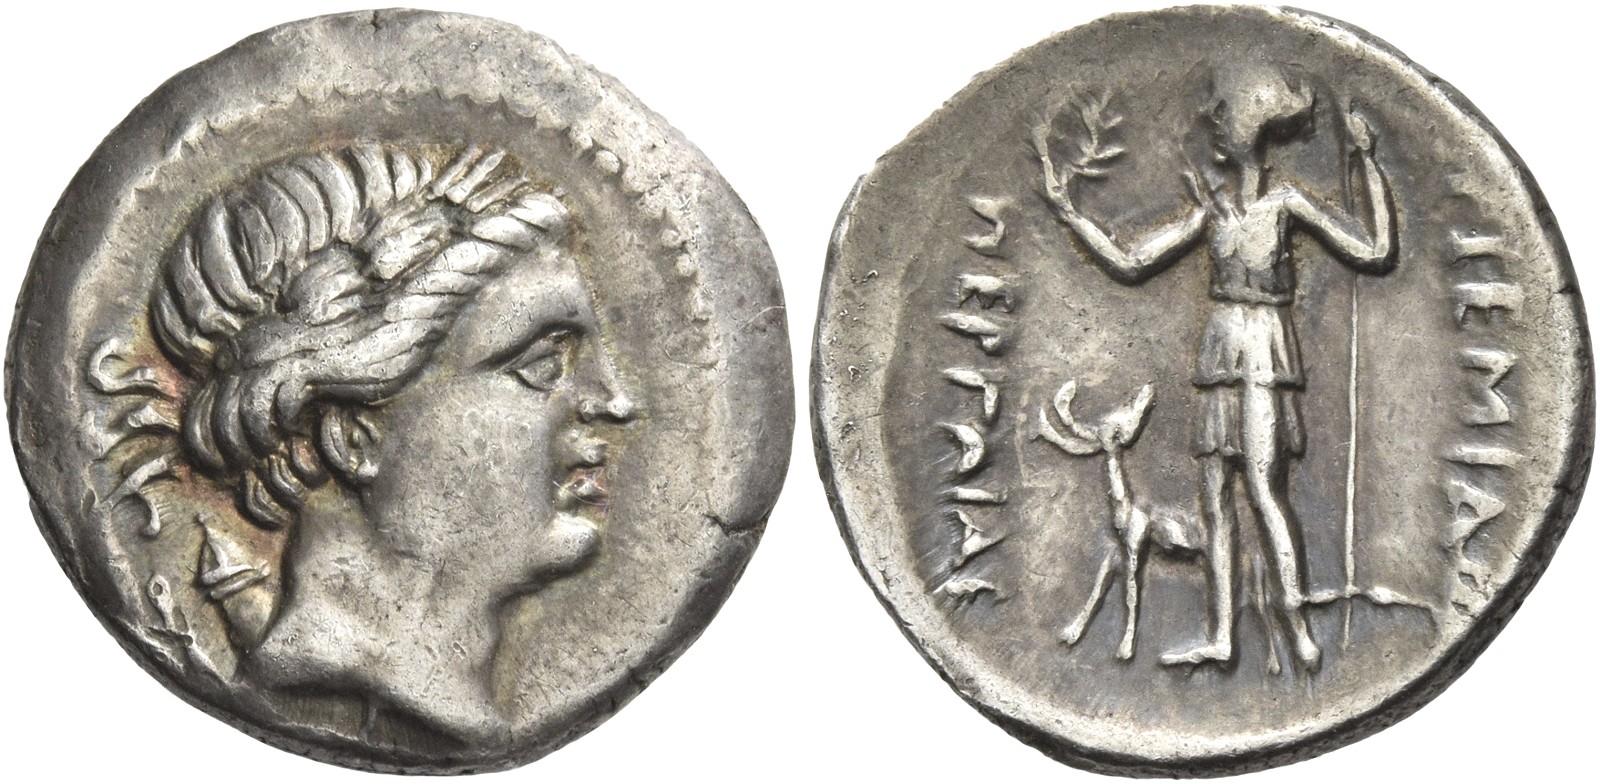 S 1844 - Perge, silver, drachms (230-220 BCE) - SILVER